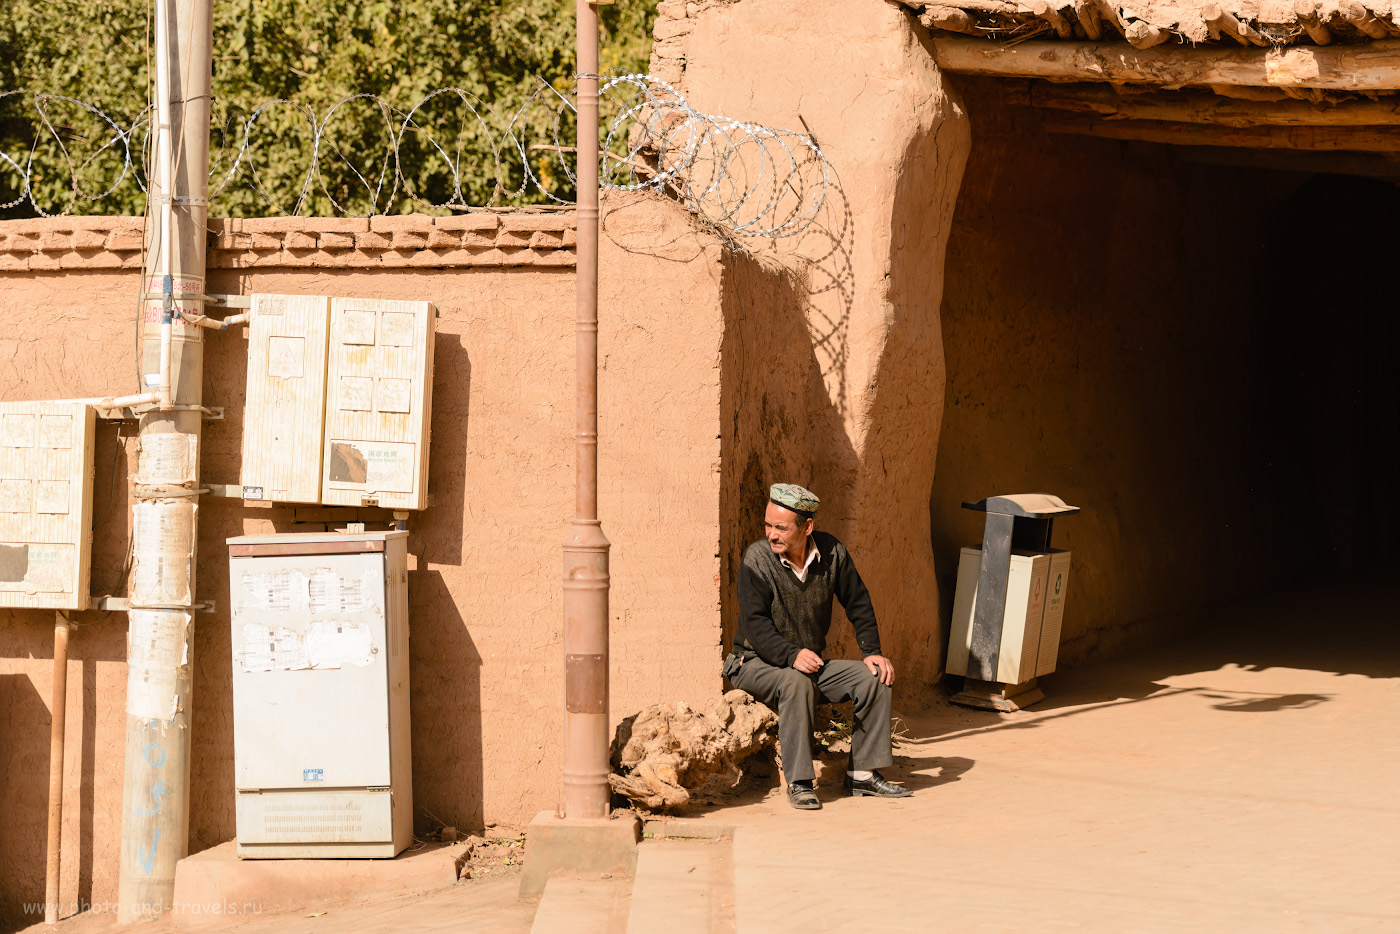 Фото 21. Уйгур в кишлаке Туюк-мазар. Экскурсии из Урумчи. 1/640, +0.67, 2.8, 100, 92.